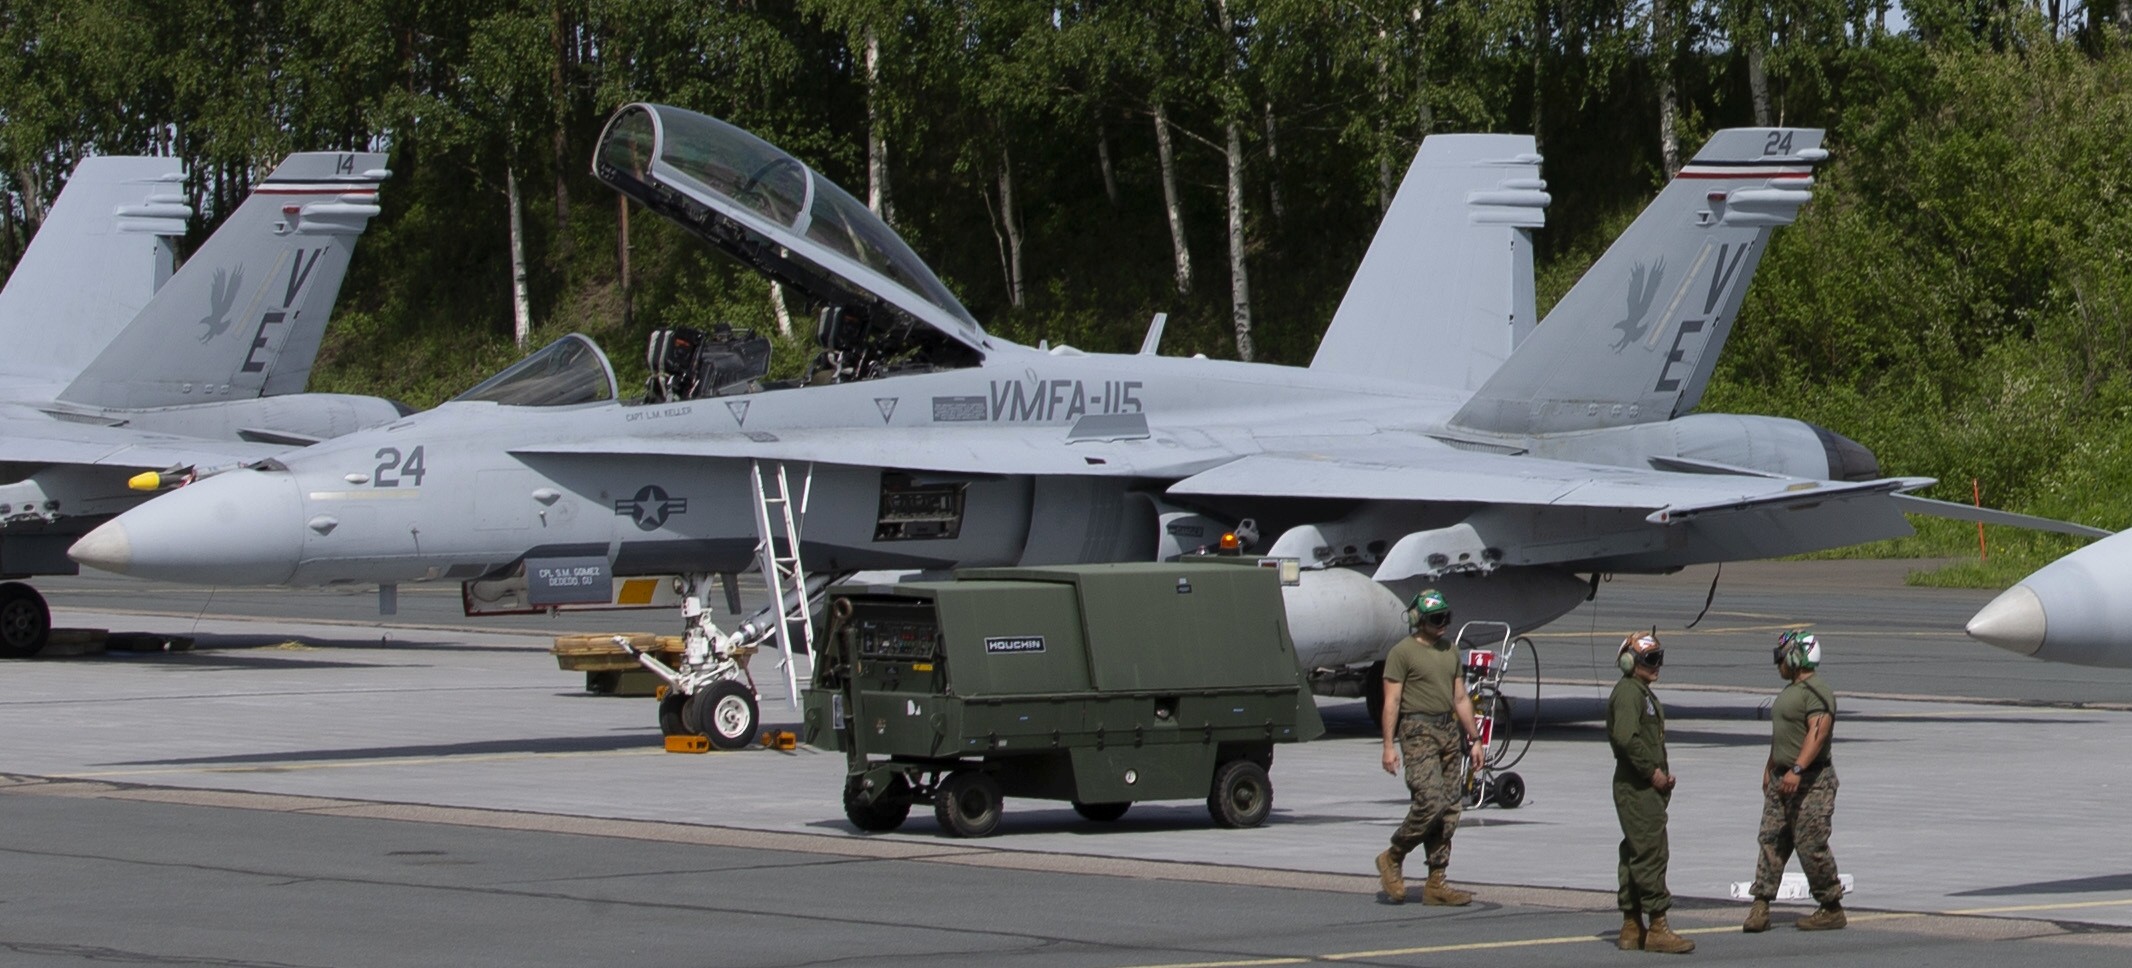 vmfa-115 silver eagles marine fighter attack squadron usmc f/a-18d hornet 222 rissala air base finland